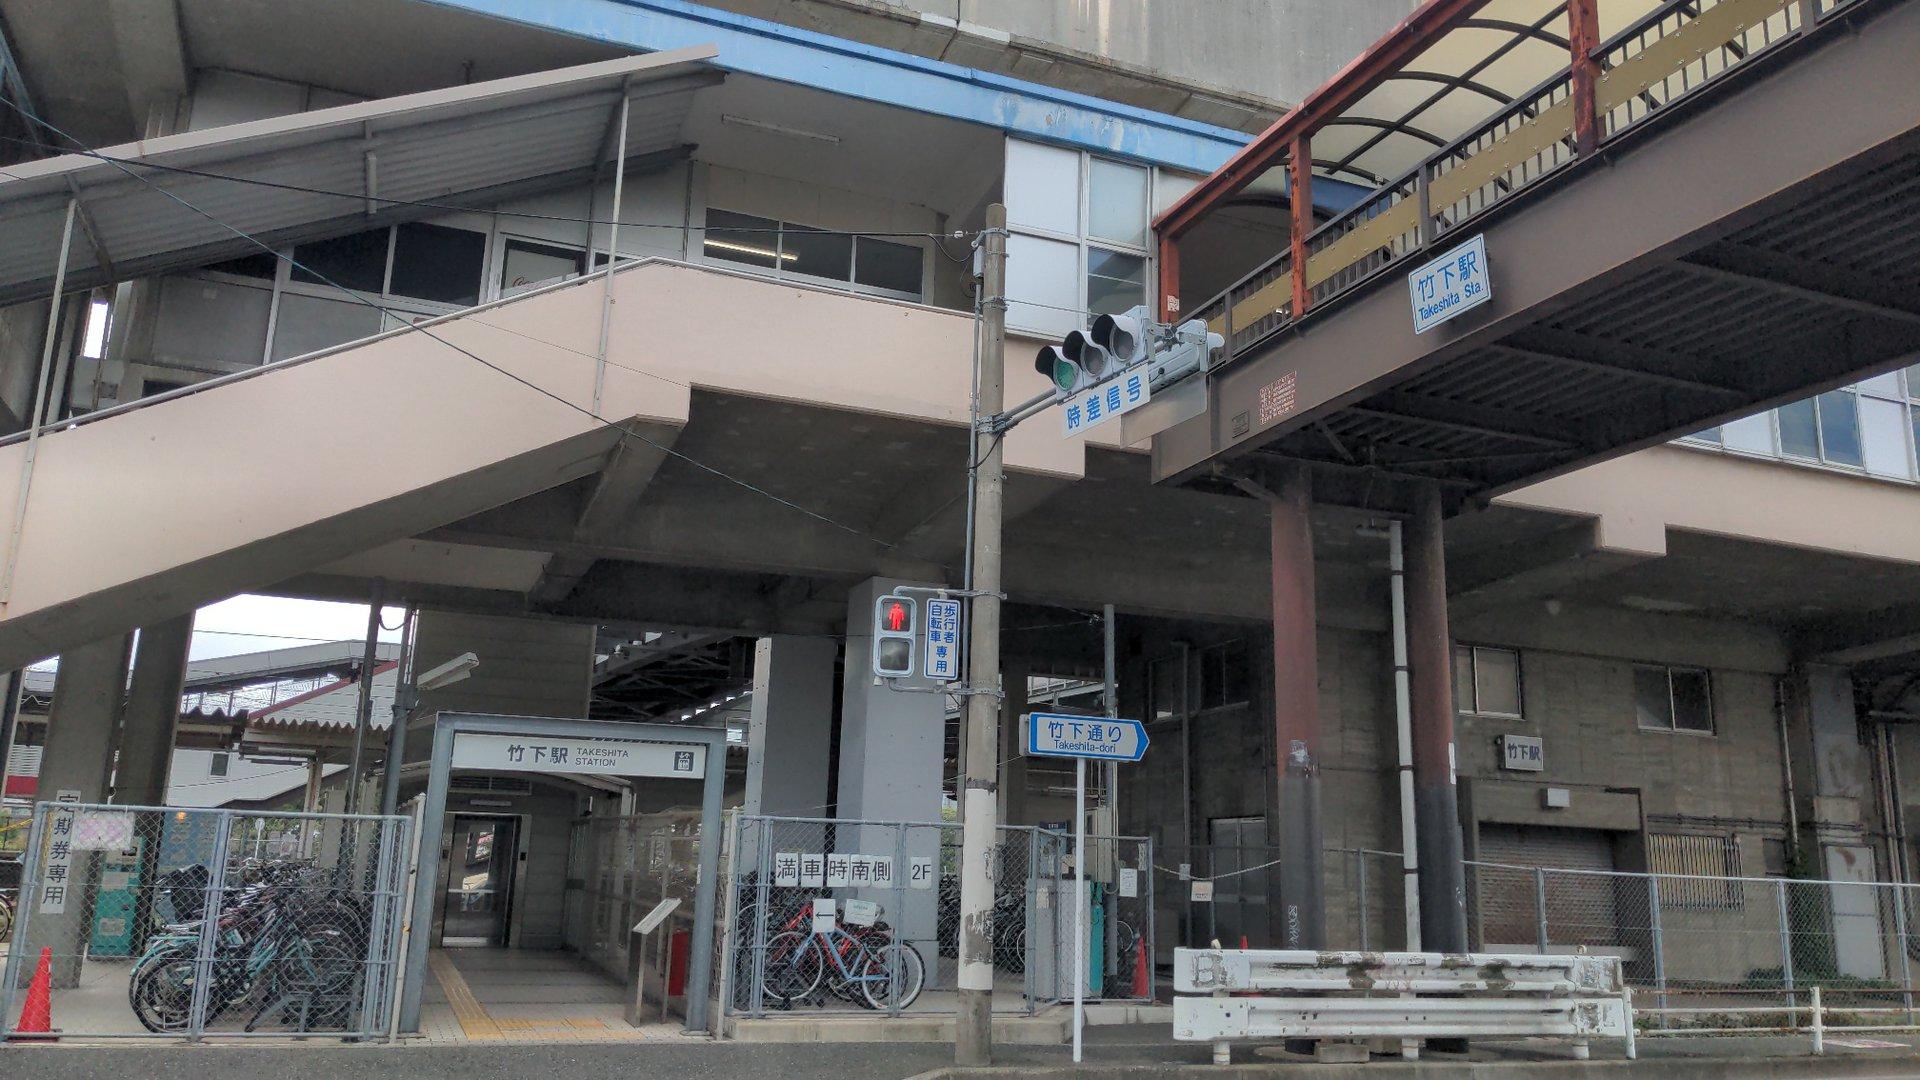 Takeshita Station (竹下駅（たけした）)